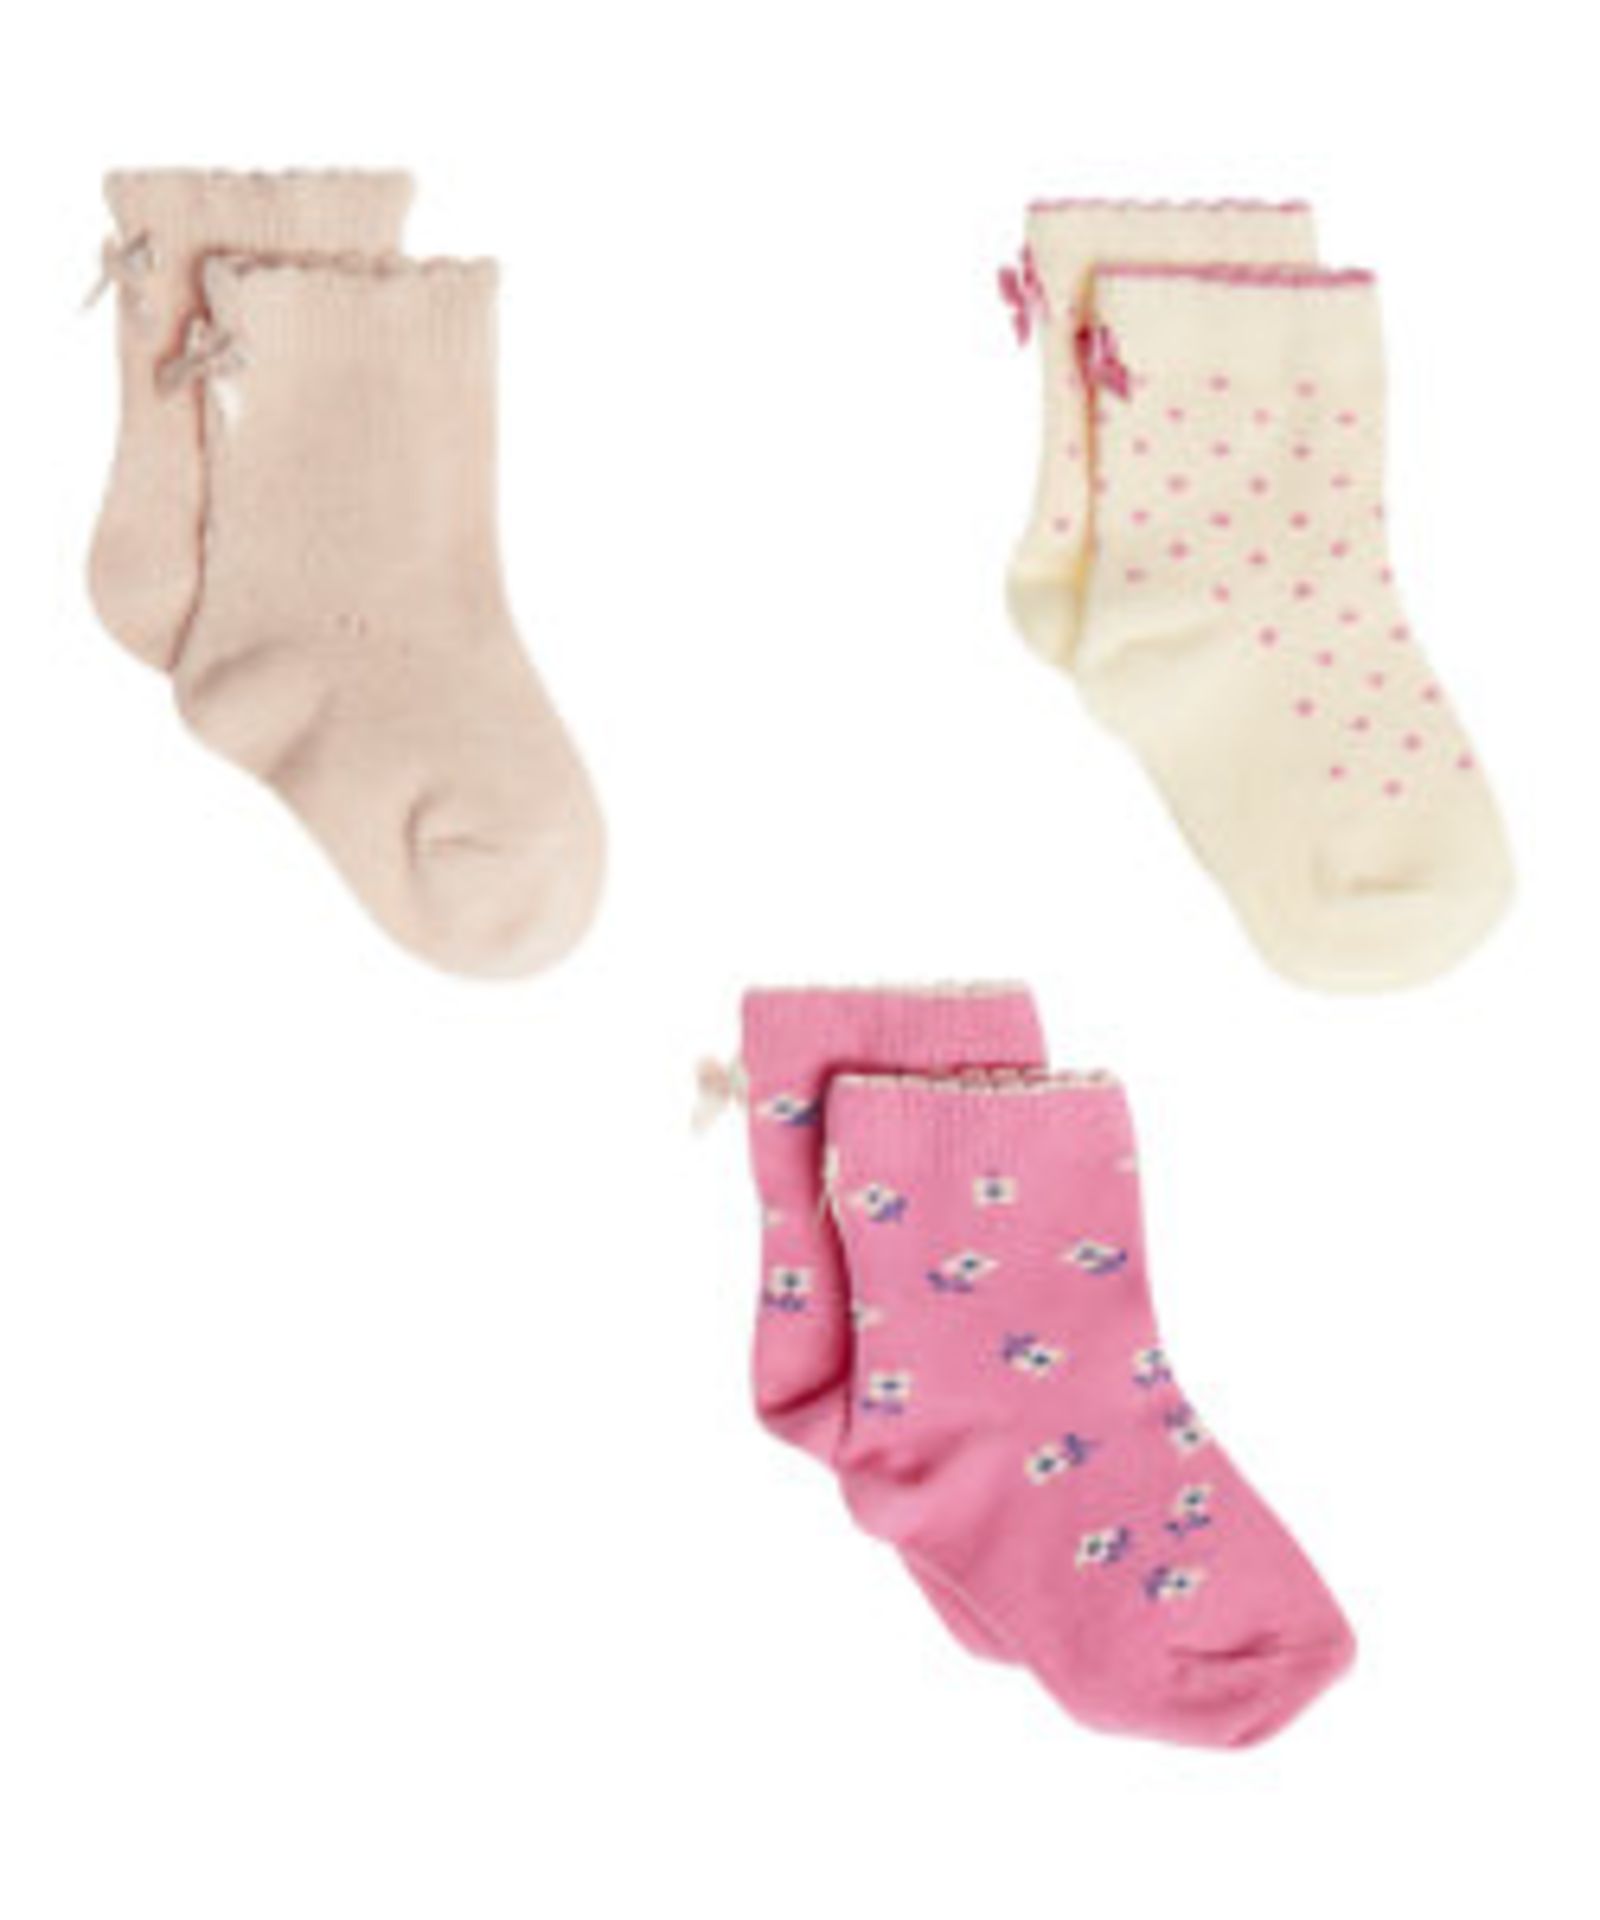 Bulk Mothercare Socks Joblot Rrp £2,010 - No Reserve - Image 9 of 11